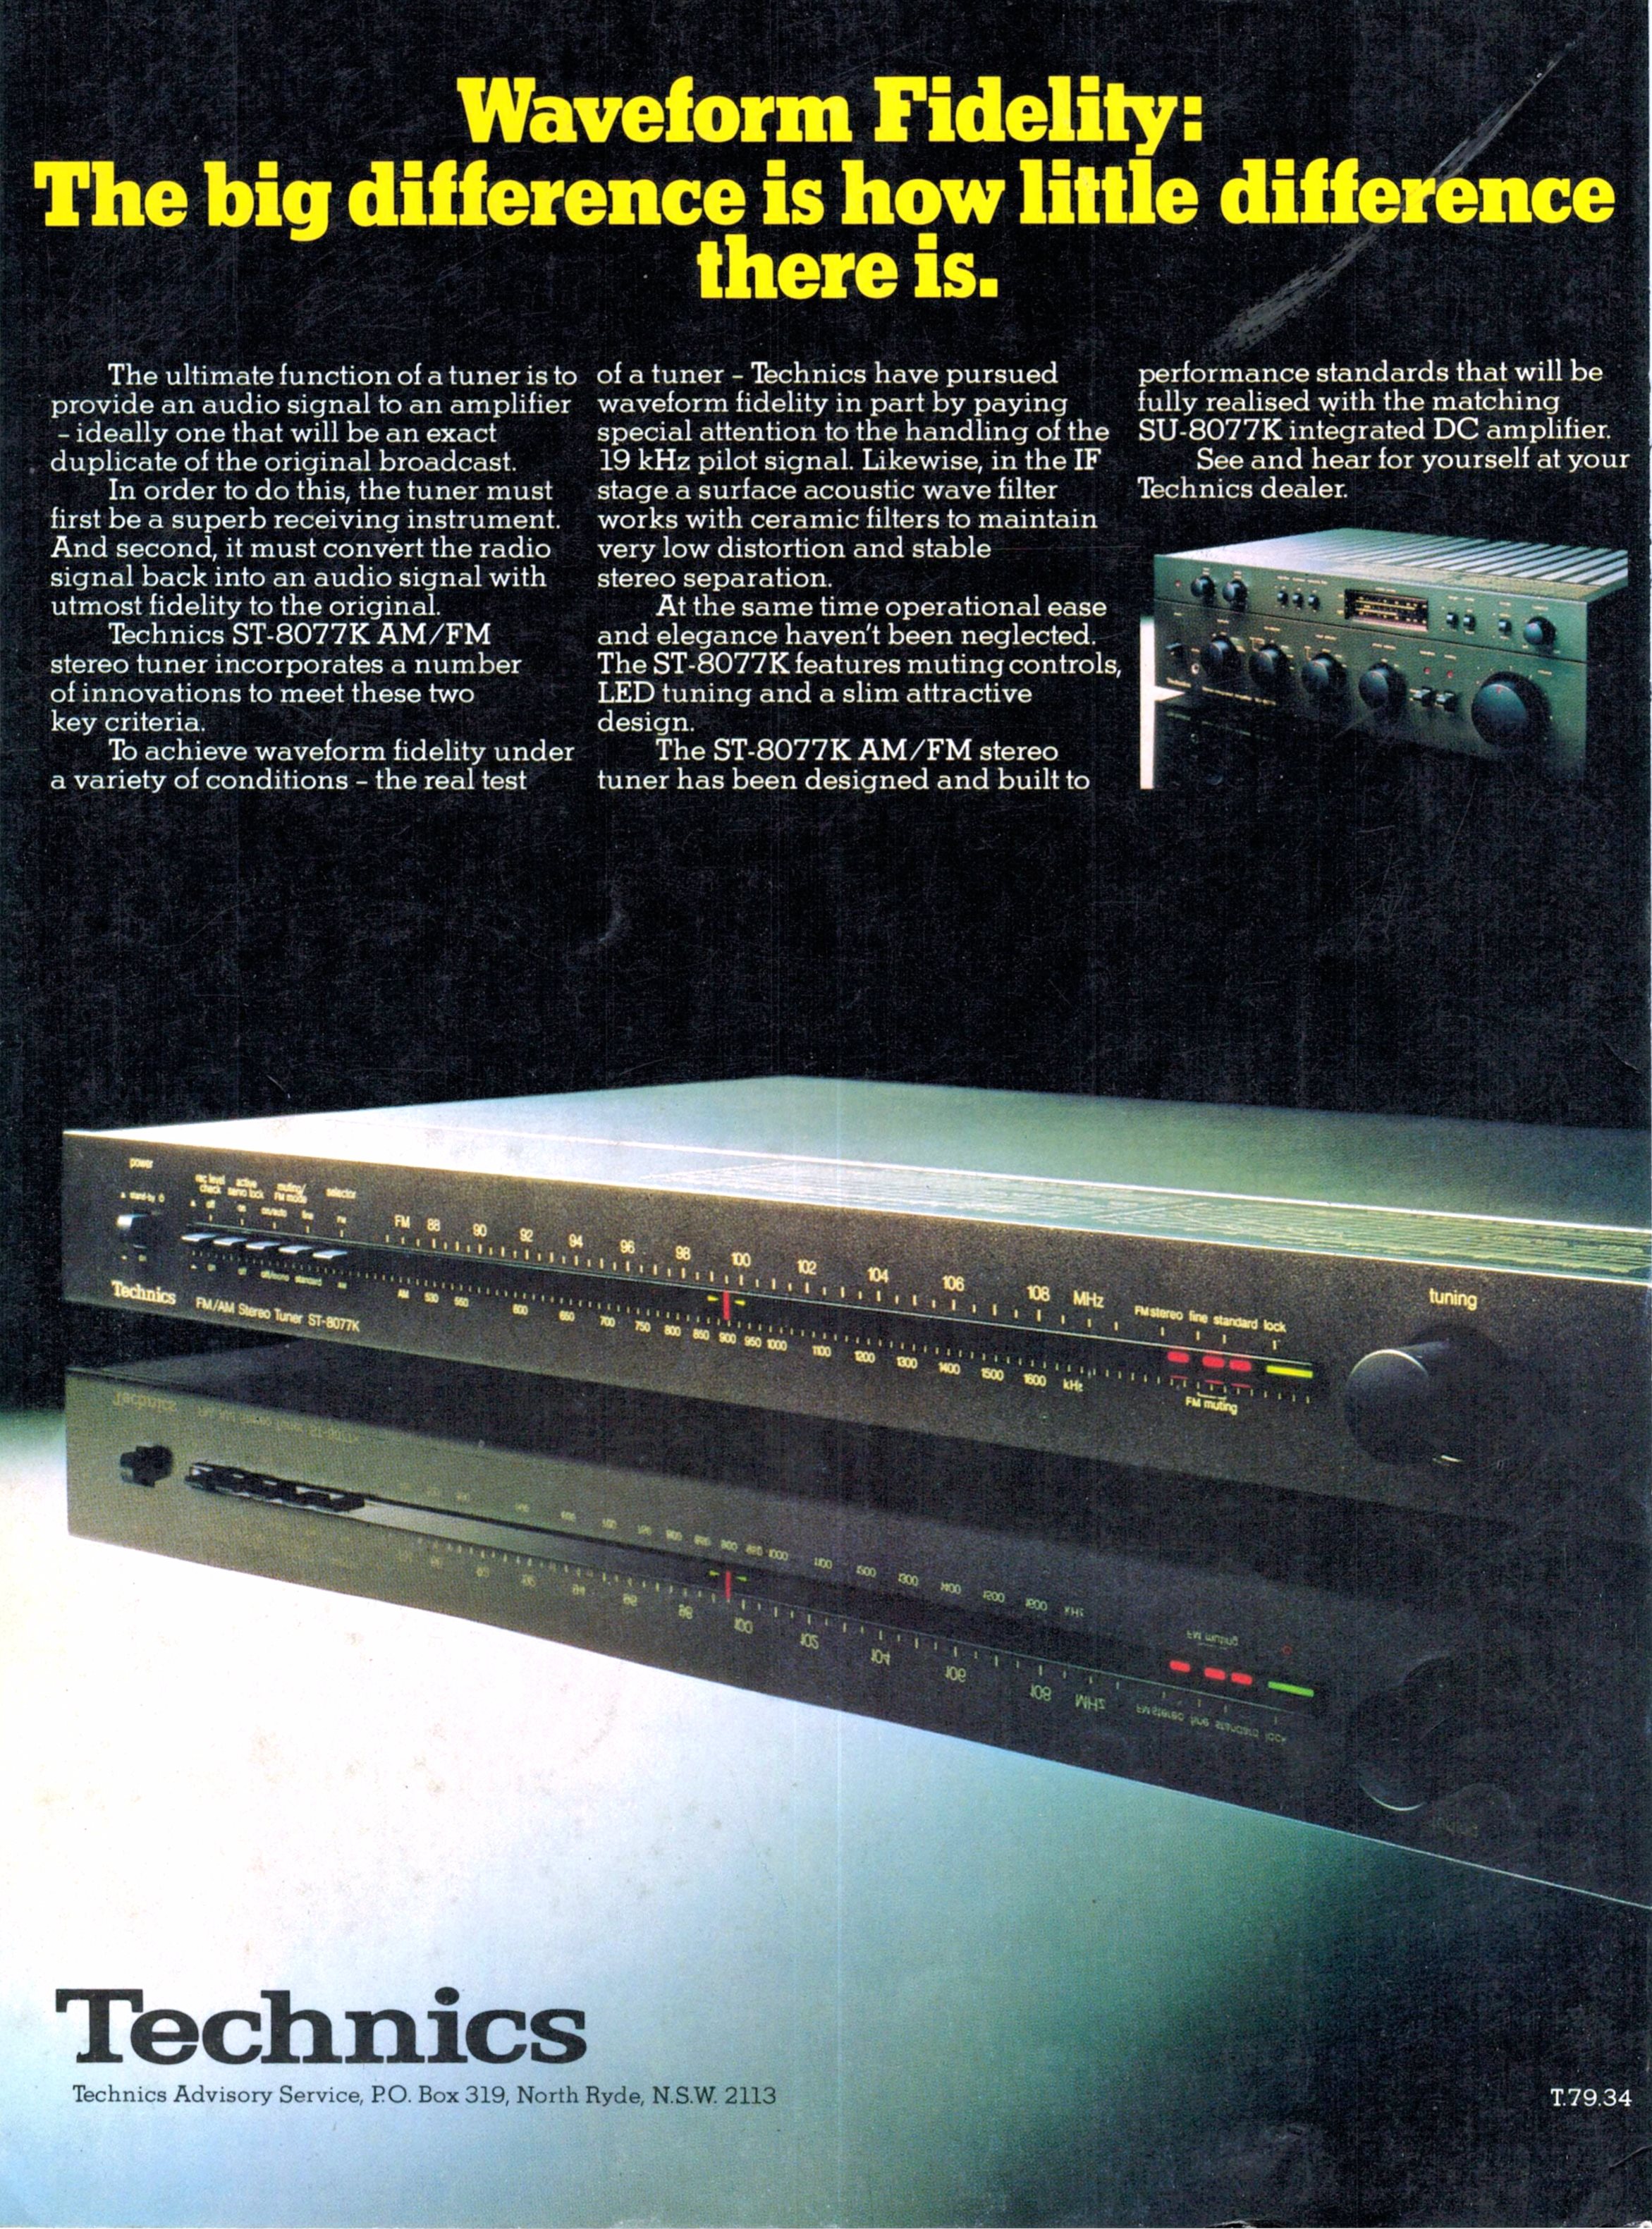 Technics 1980 65.jpg